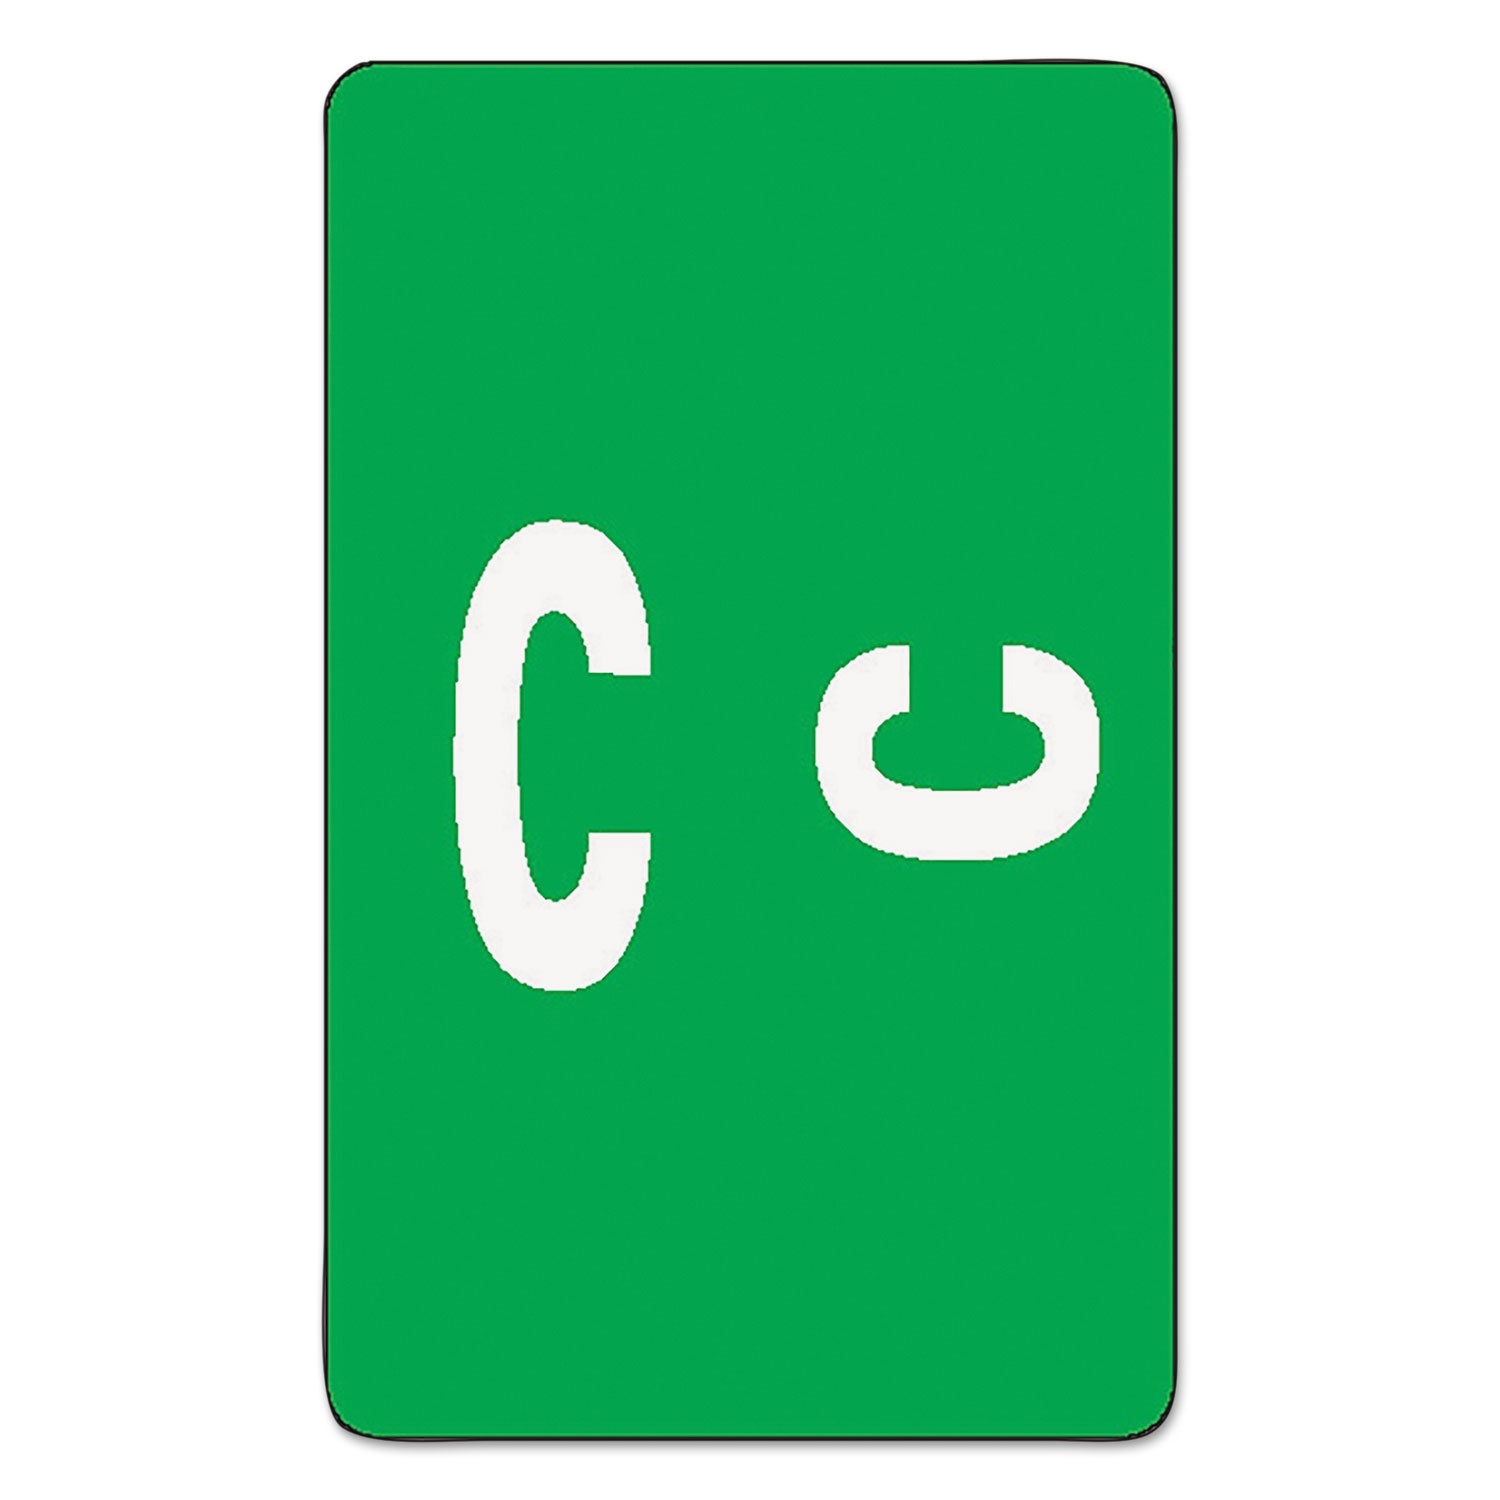 AlphaZ Color-Coded Second Letter Alphabetical Labels, C, 1 x 1.63, Dark Green, 10/Sheet, 10 Sheets/Pack - 